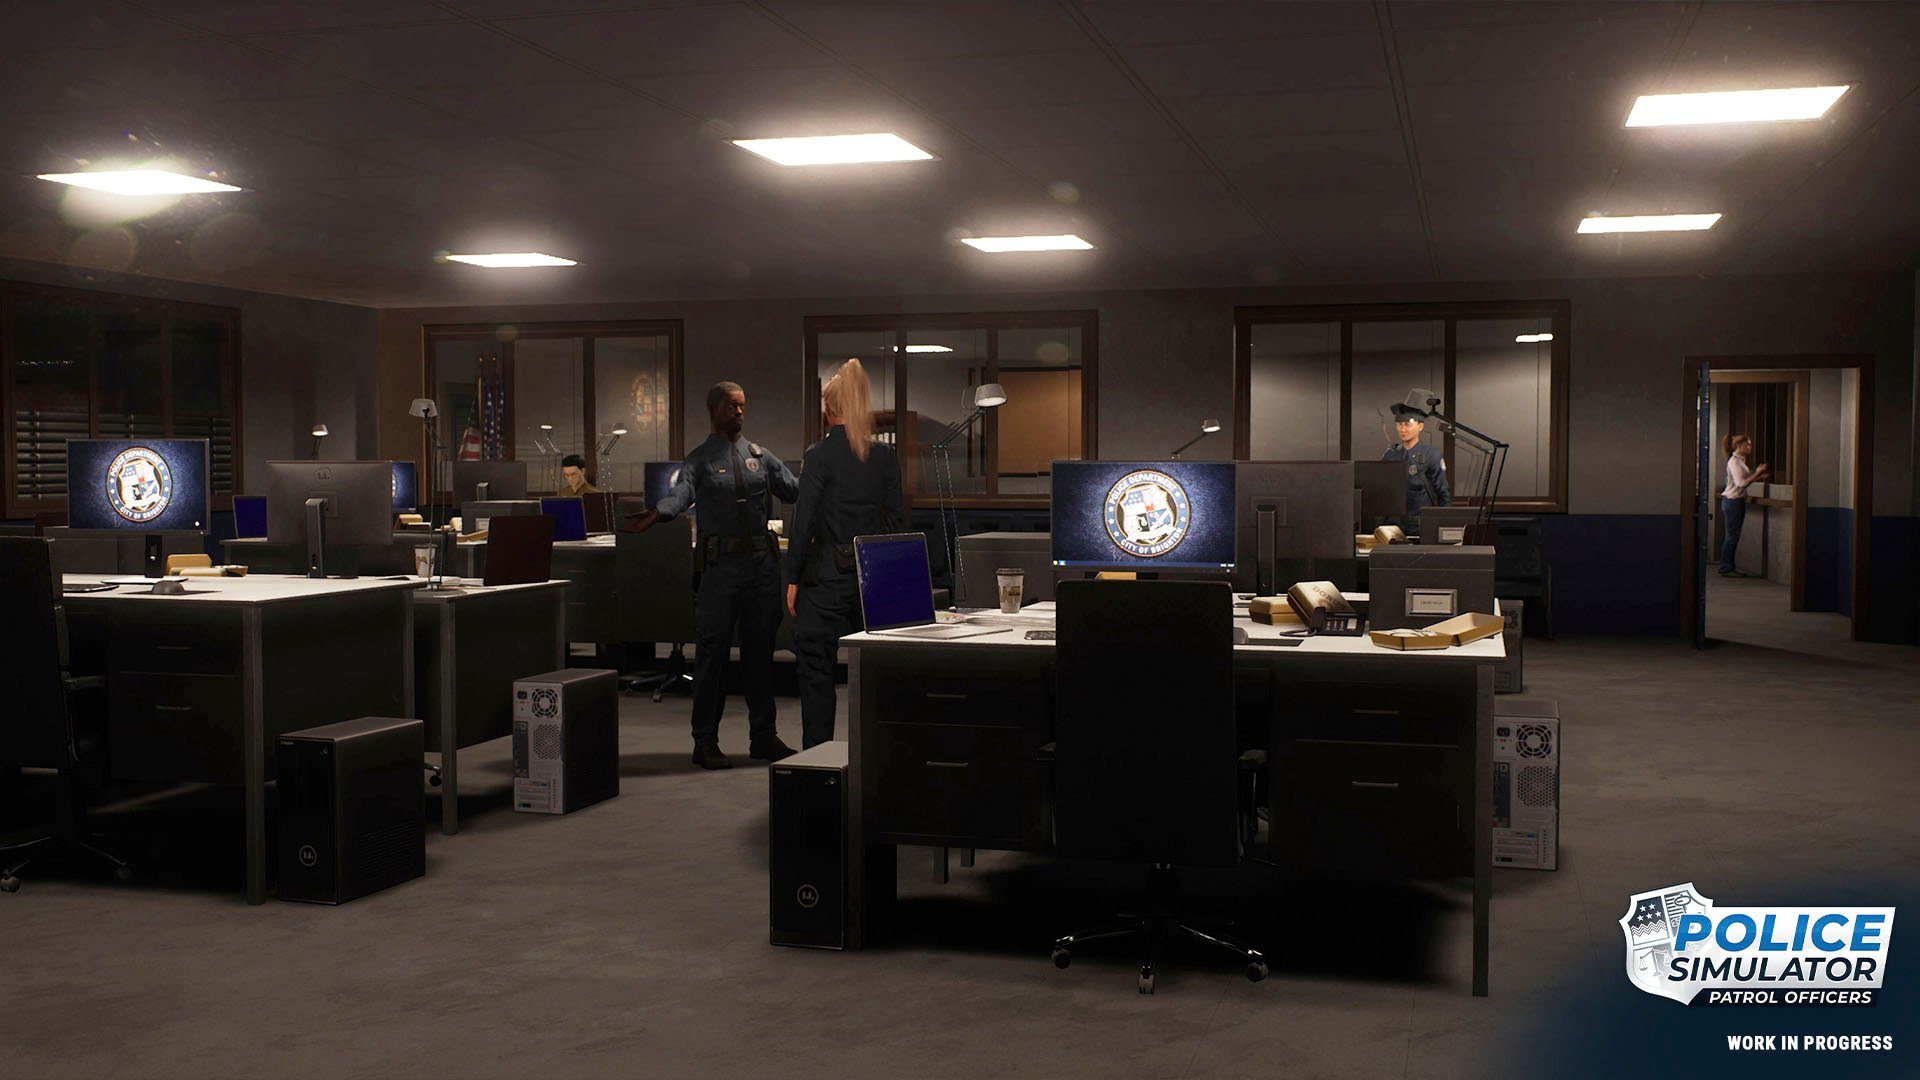 Astragon Officers 5 Police Simulator: Patrol PlayStation